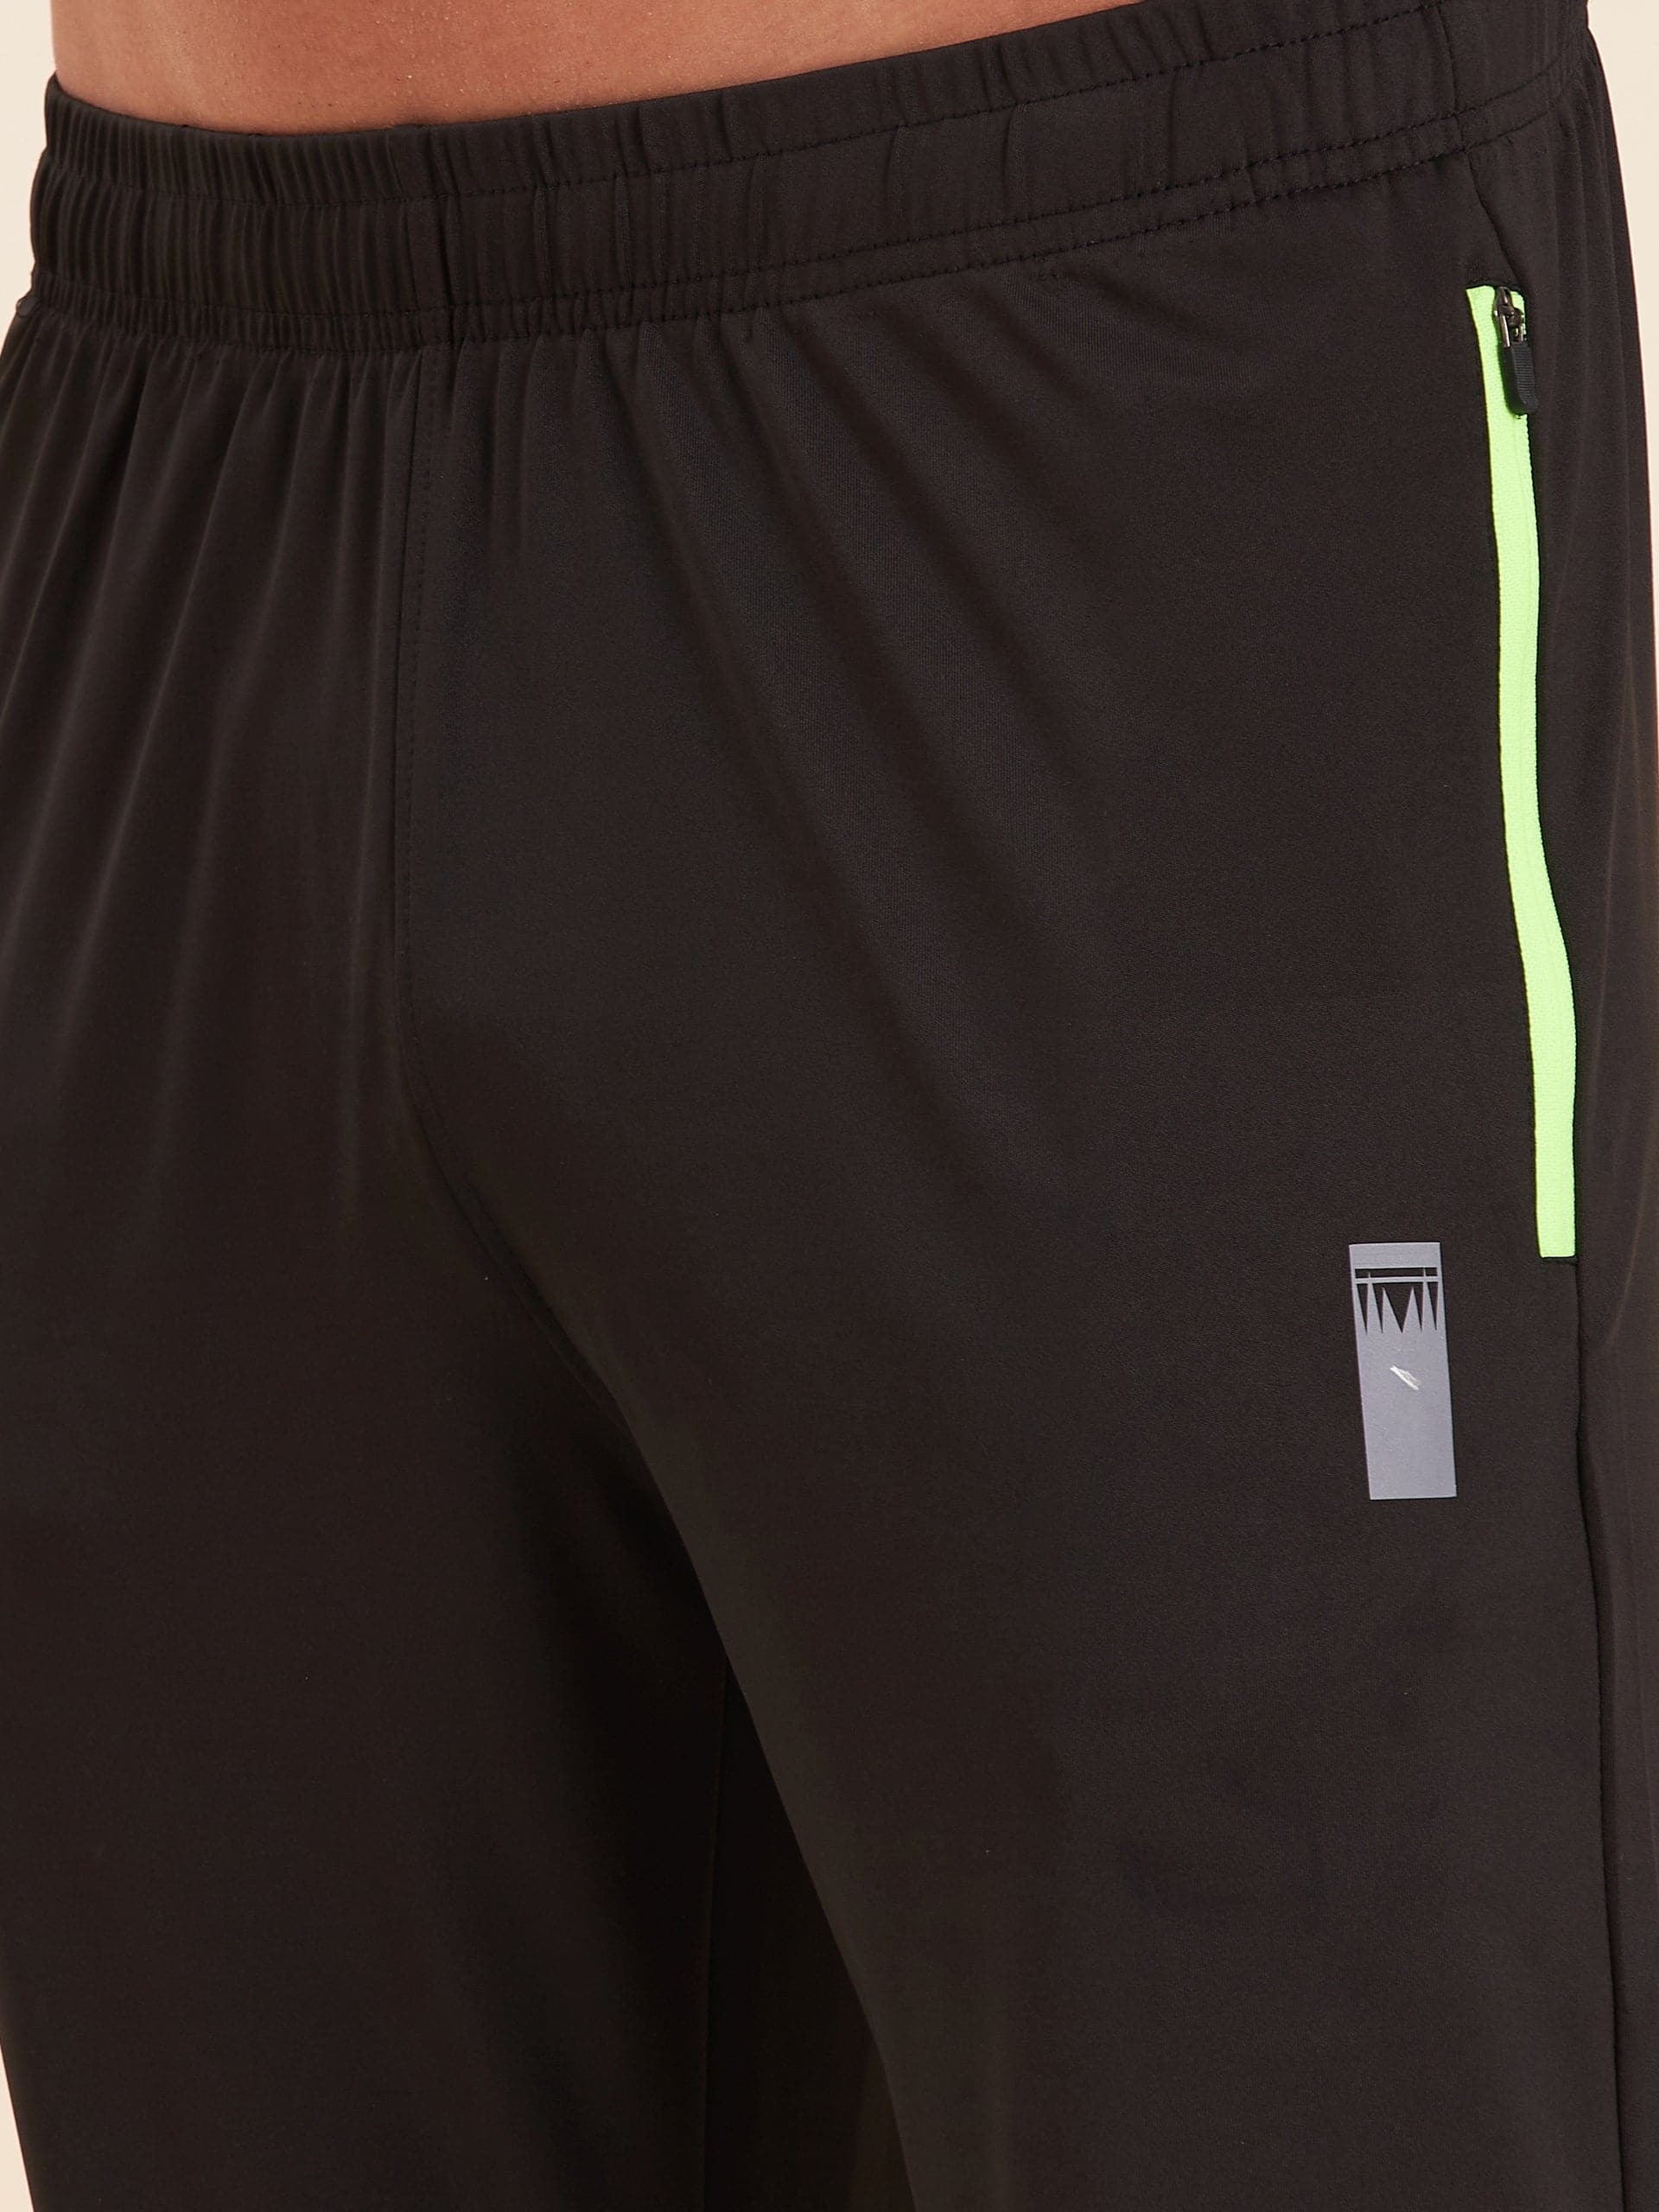 Men's Black Dry Fit Stretchable Slim Track Pants - LYUSH-MASCLN